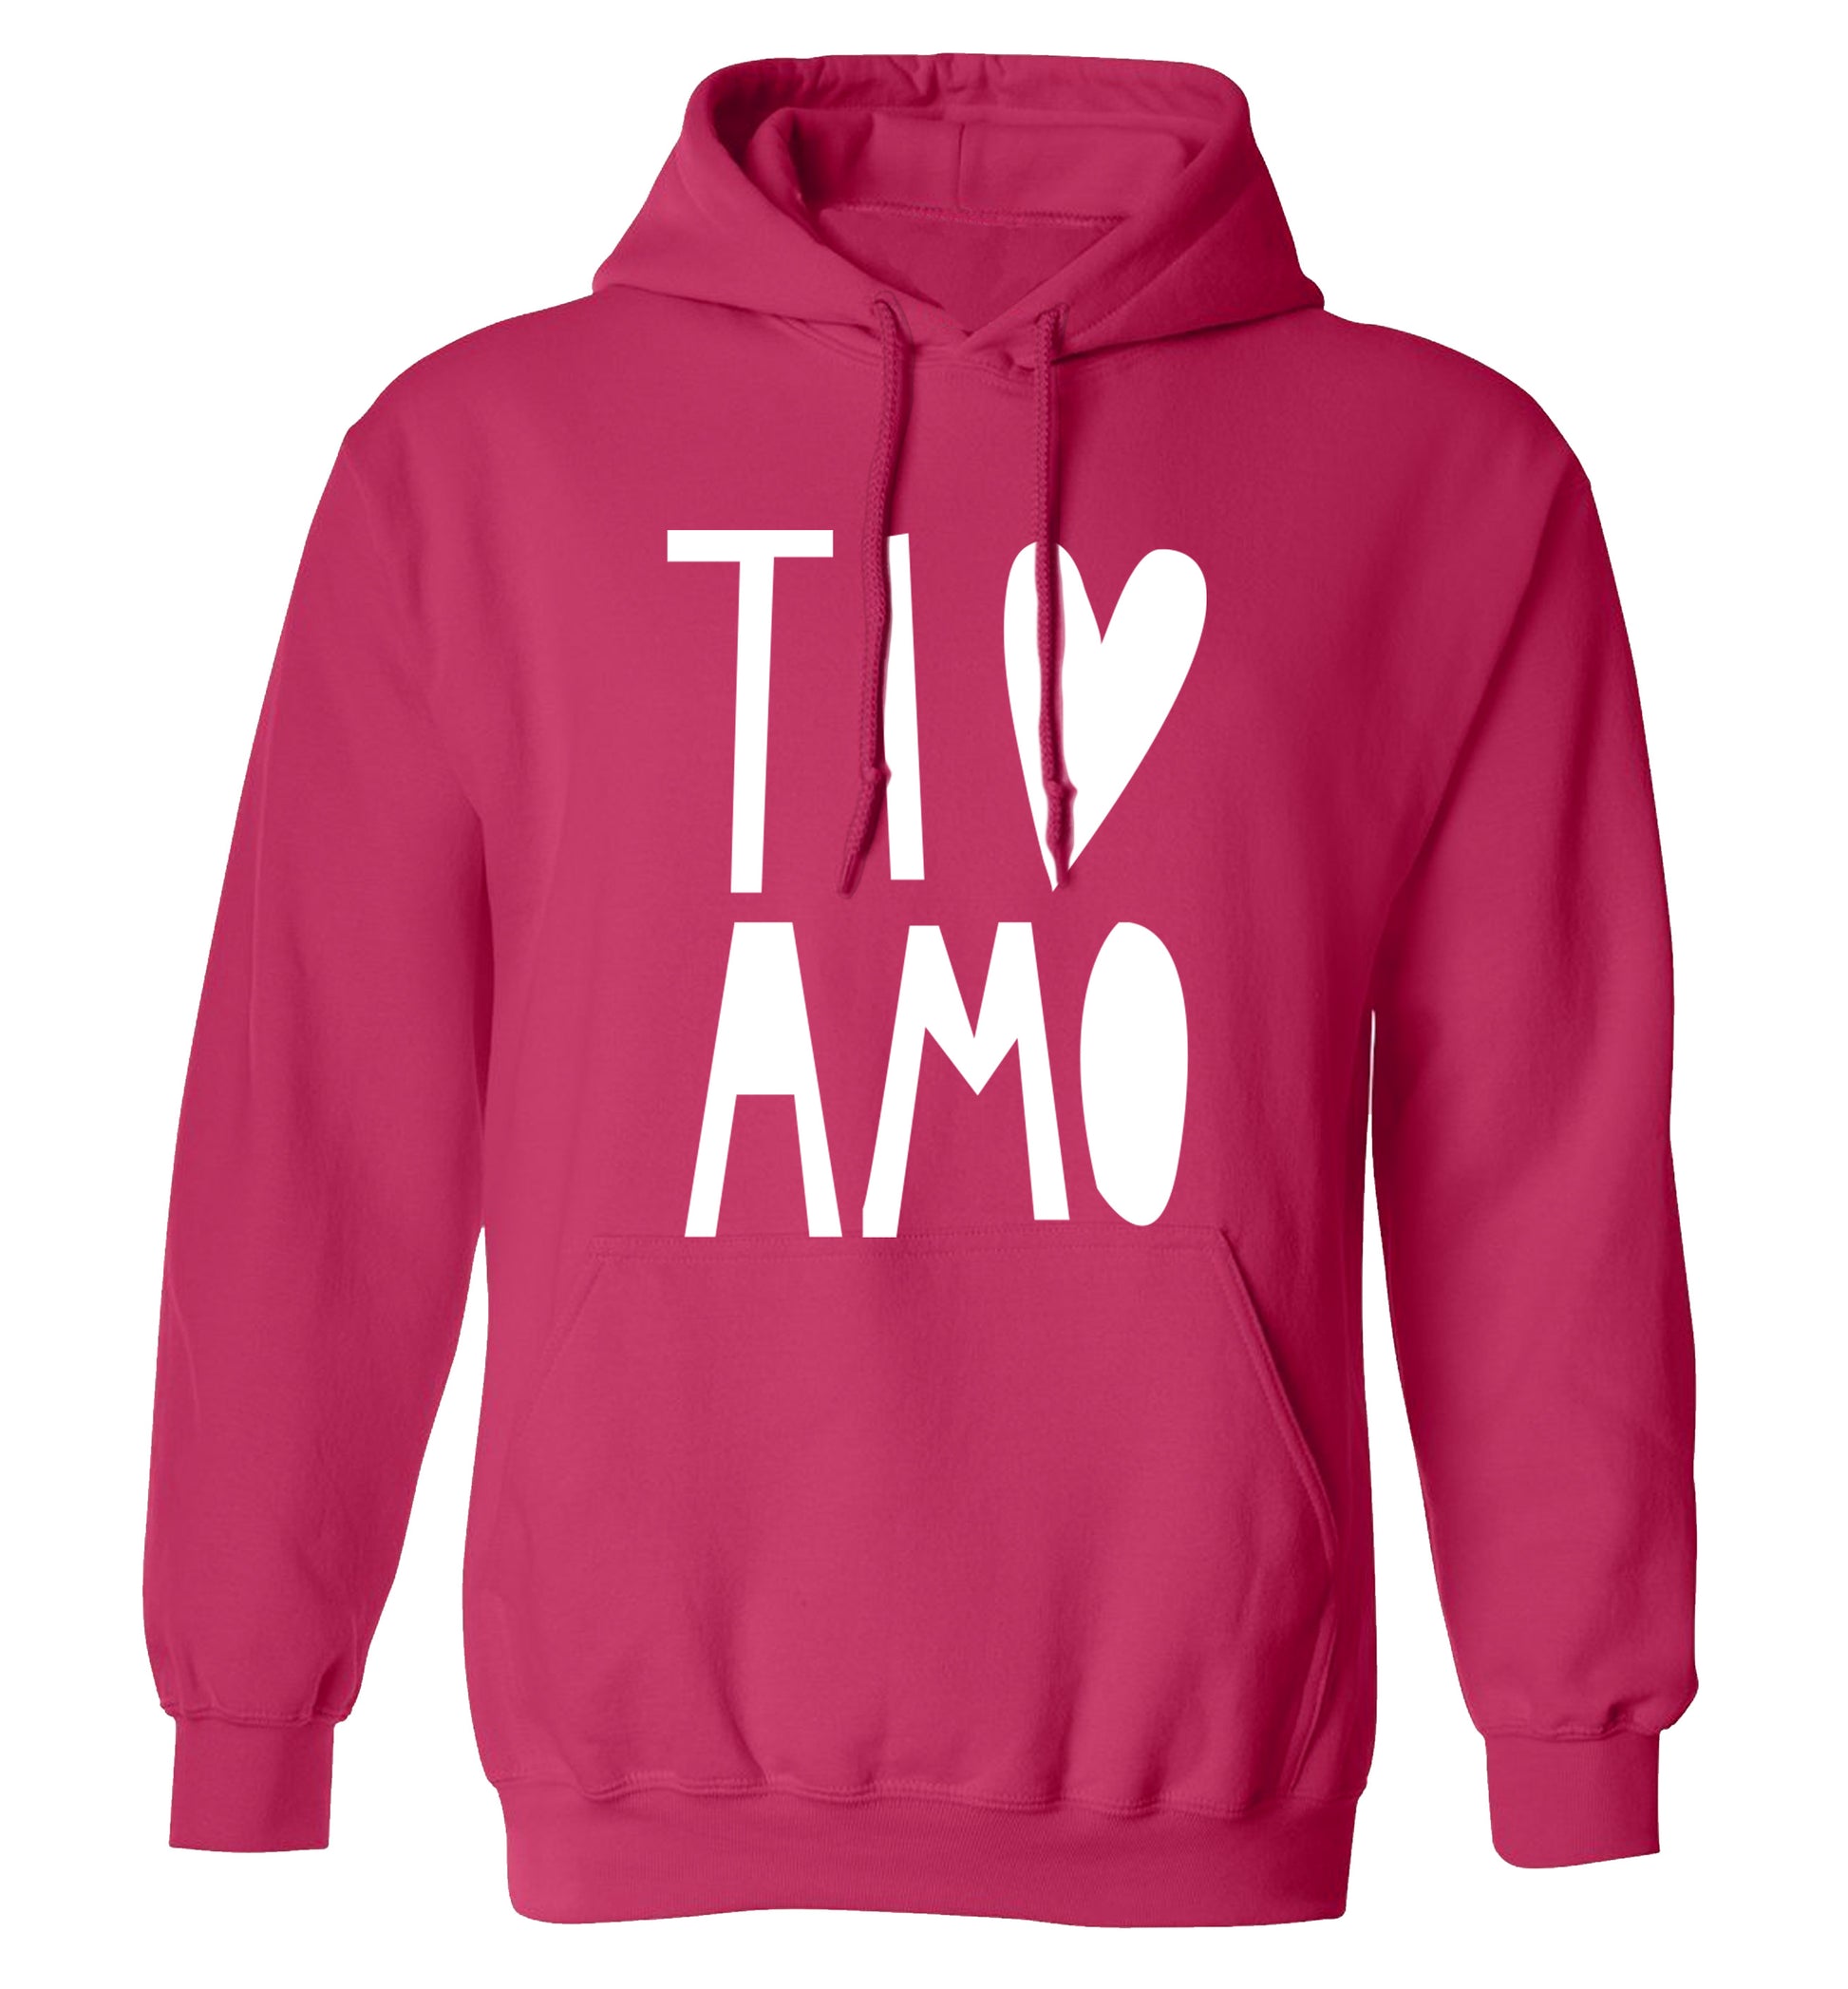 Ti amo - I love you adults unisex pink hoodie 2XL